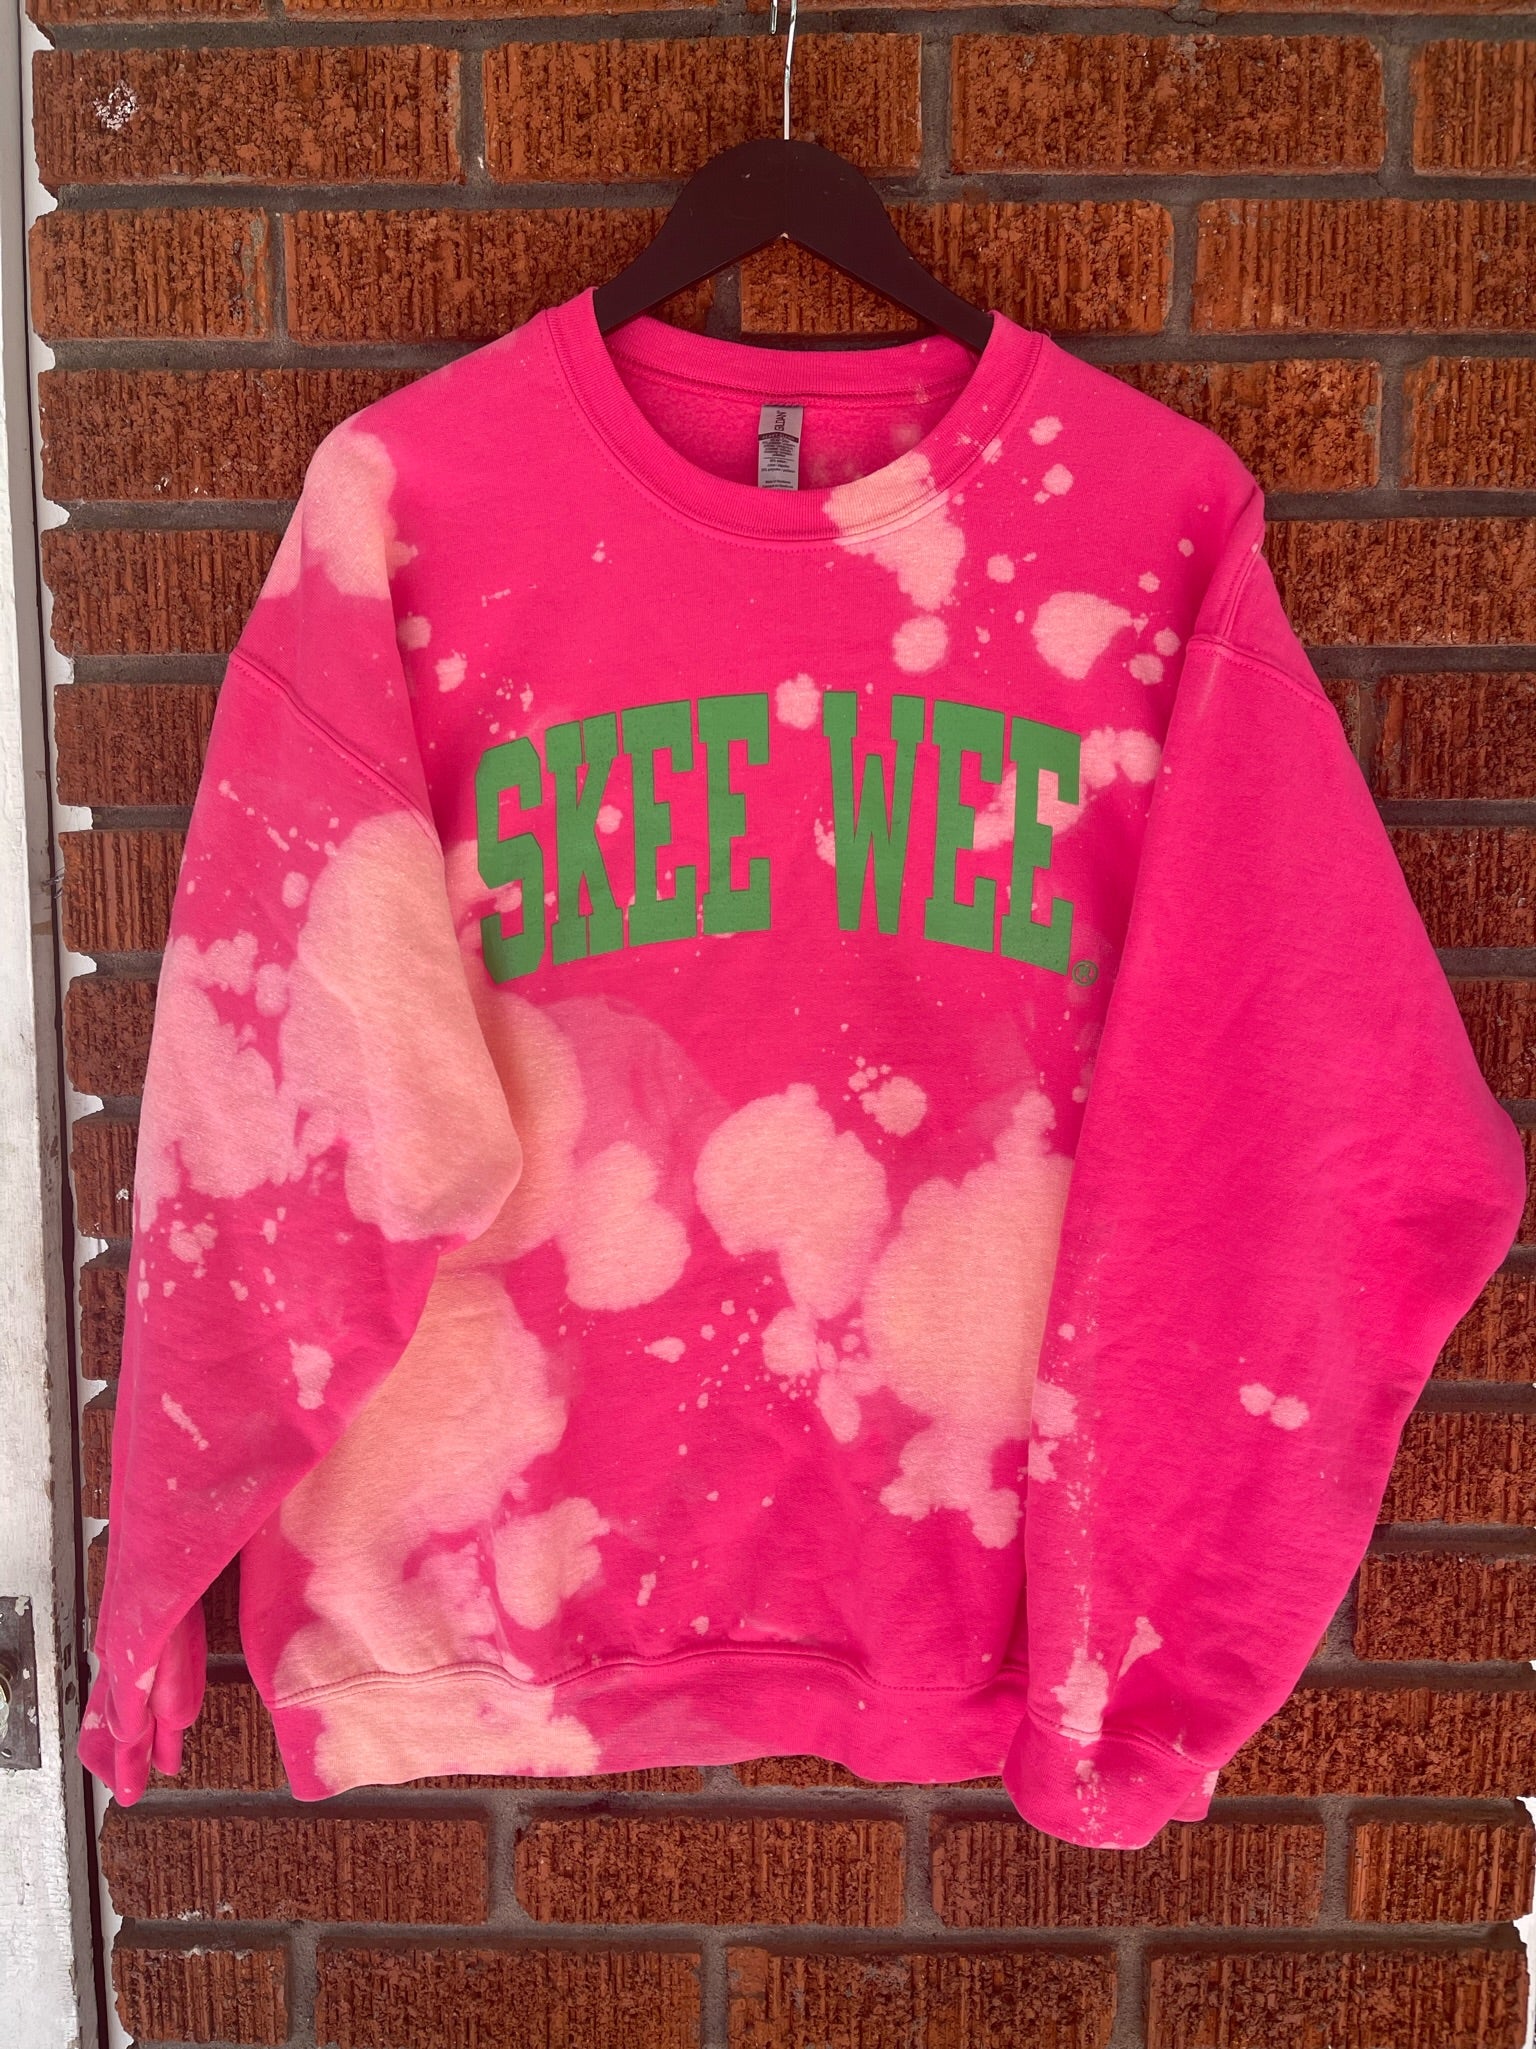 "The Signature Stroll" SkeeWee Pink Hand Dyed Sweatshirt - ccldesignsusa - AKA Alpha Kappa Alpha Pink and Green handmade hand bleach tie dye